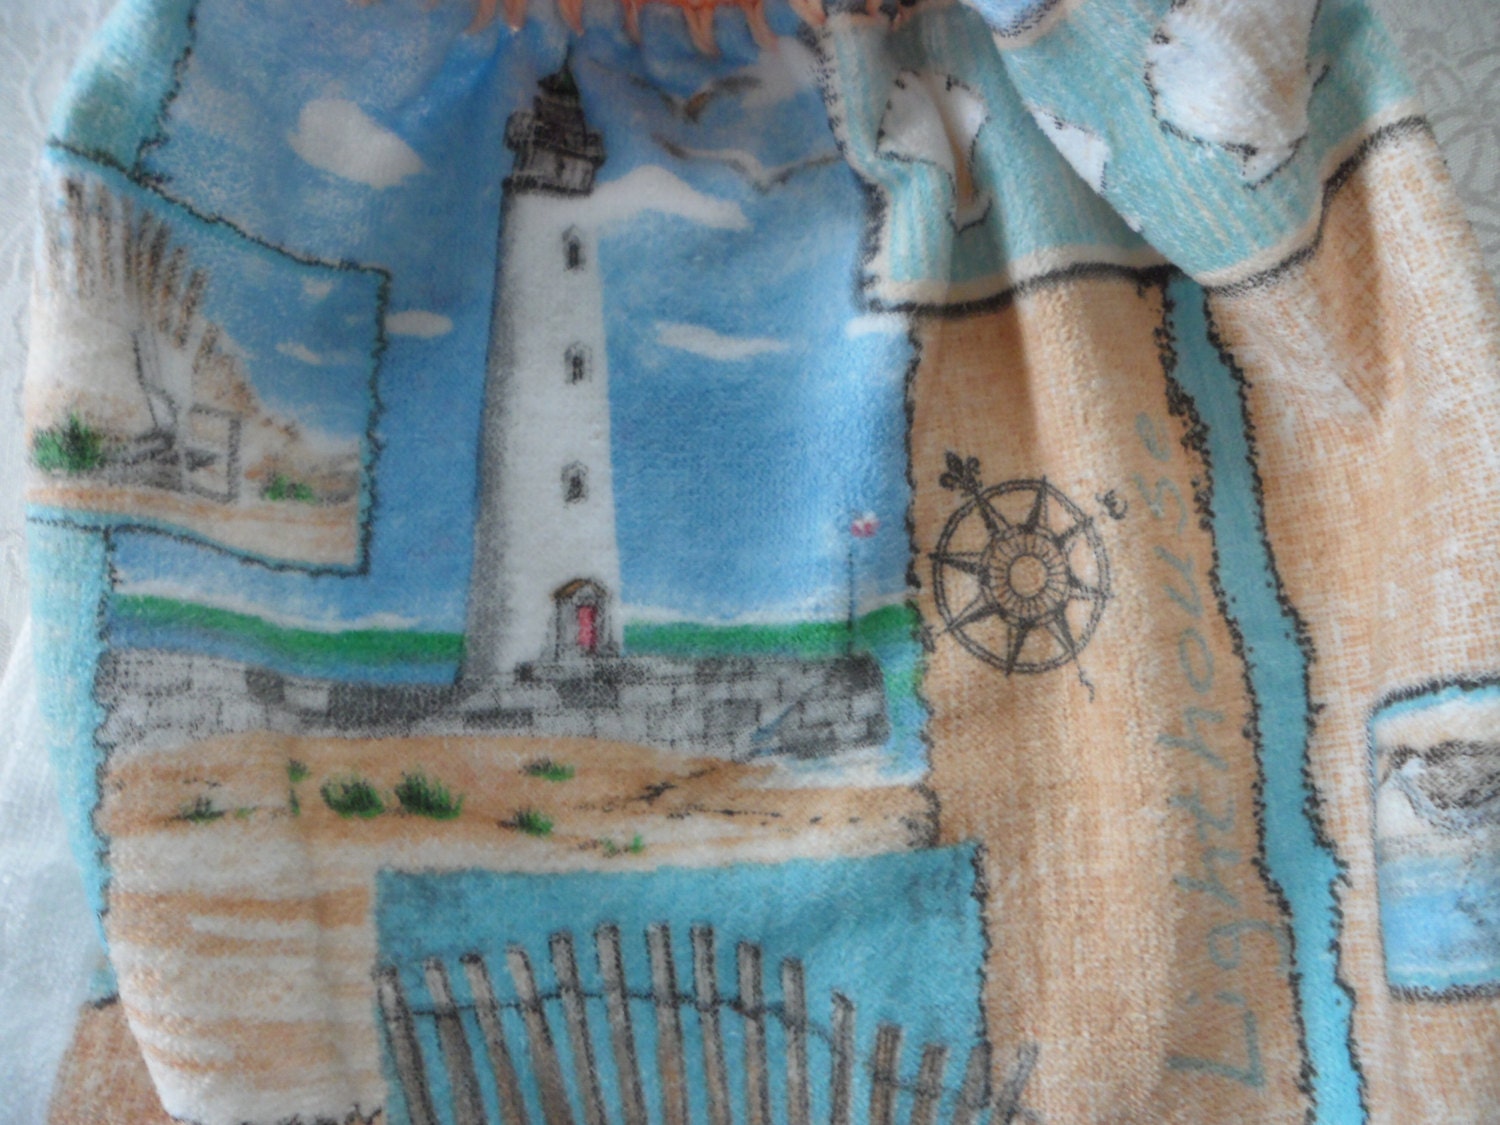 Hanging Single Kitchen Towel LighthouseTowel - handknitted4you